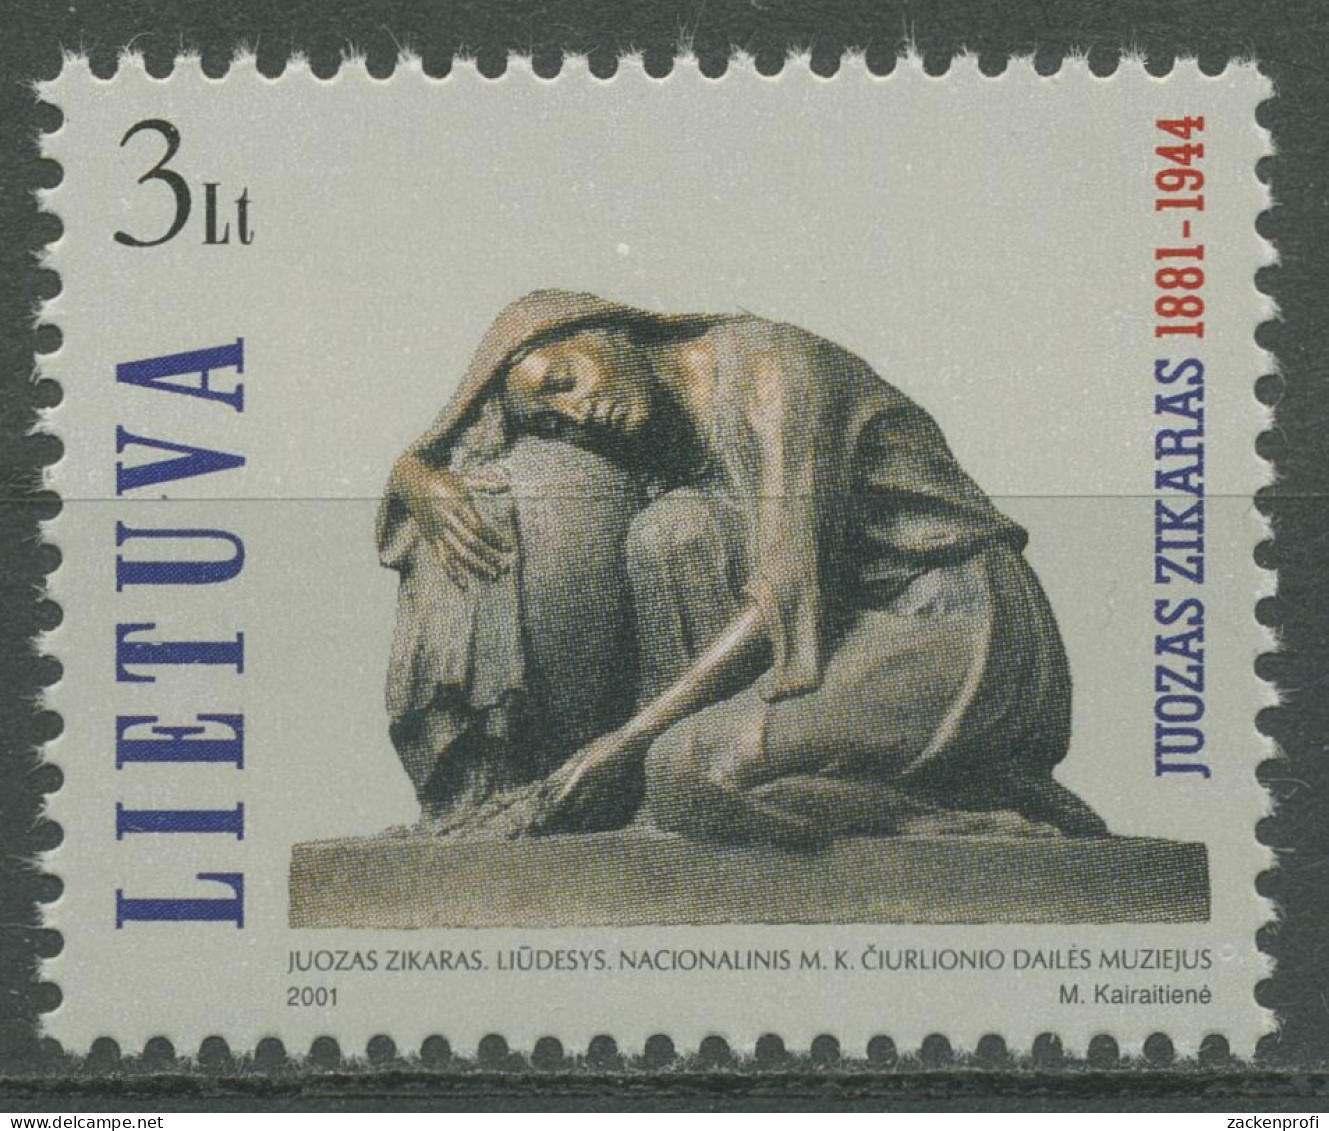 Litauen 2001 Bildhauer Juozas Zikaras Skulptur 772 Postfrisch - Lithuania